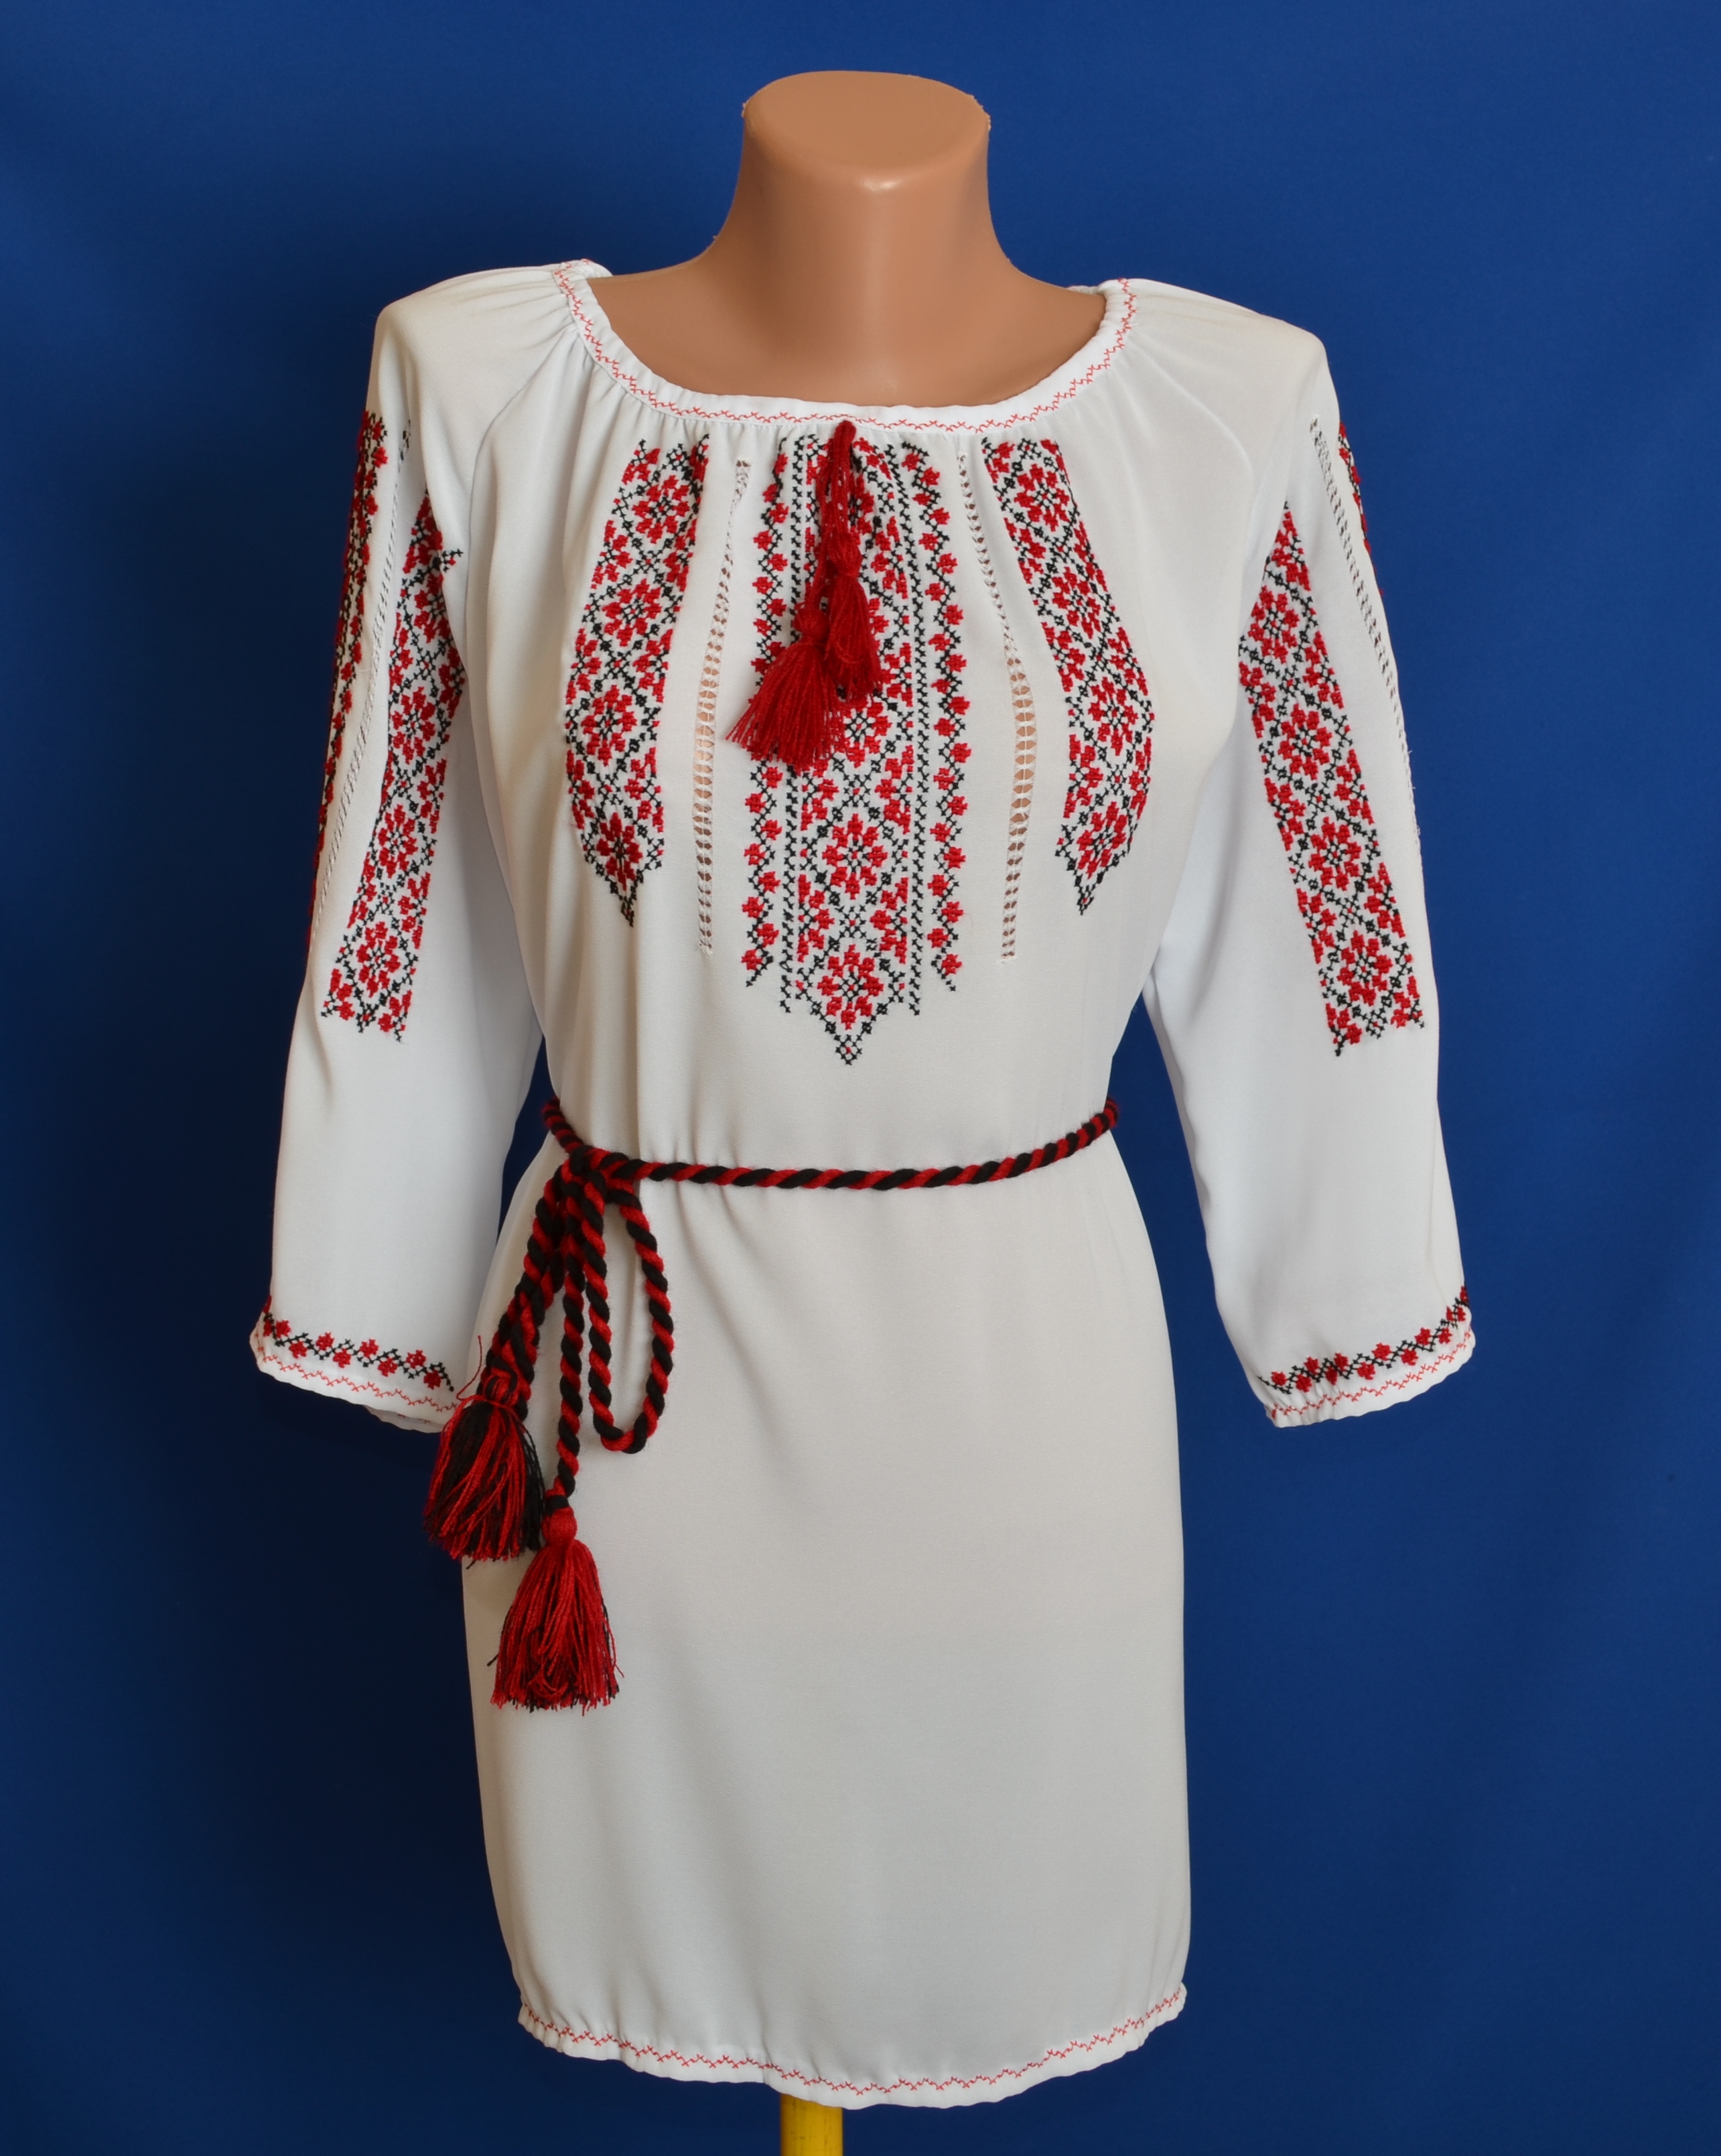 vyshyvanka all sizes Ukrainian embroidered laces traditional blouse sorochka 